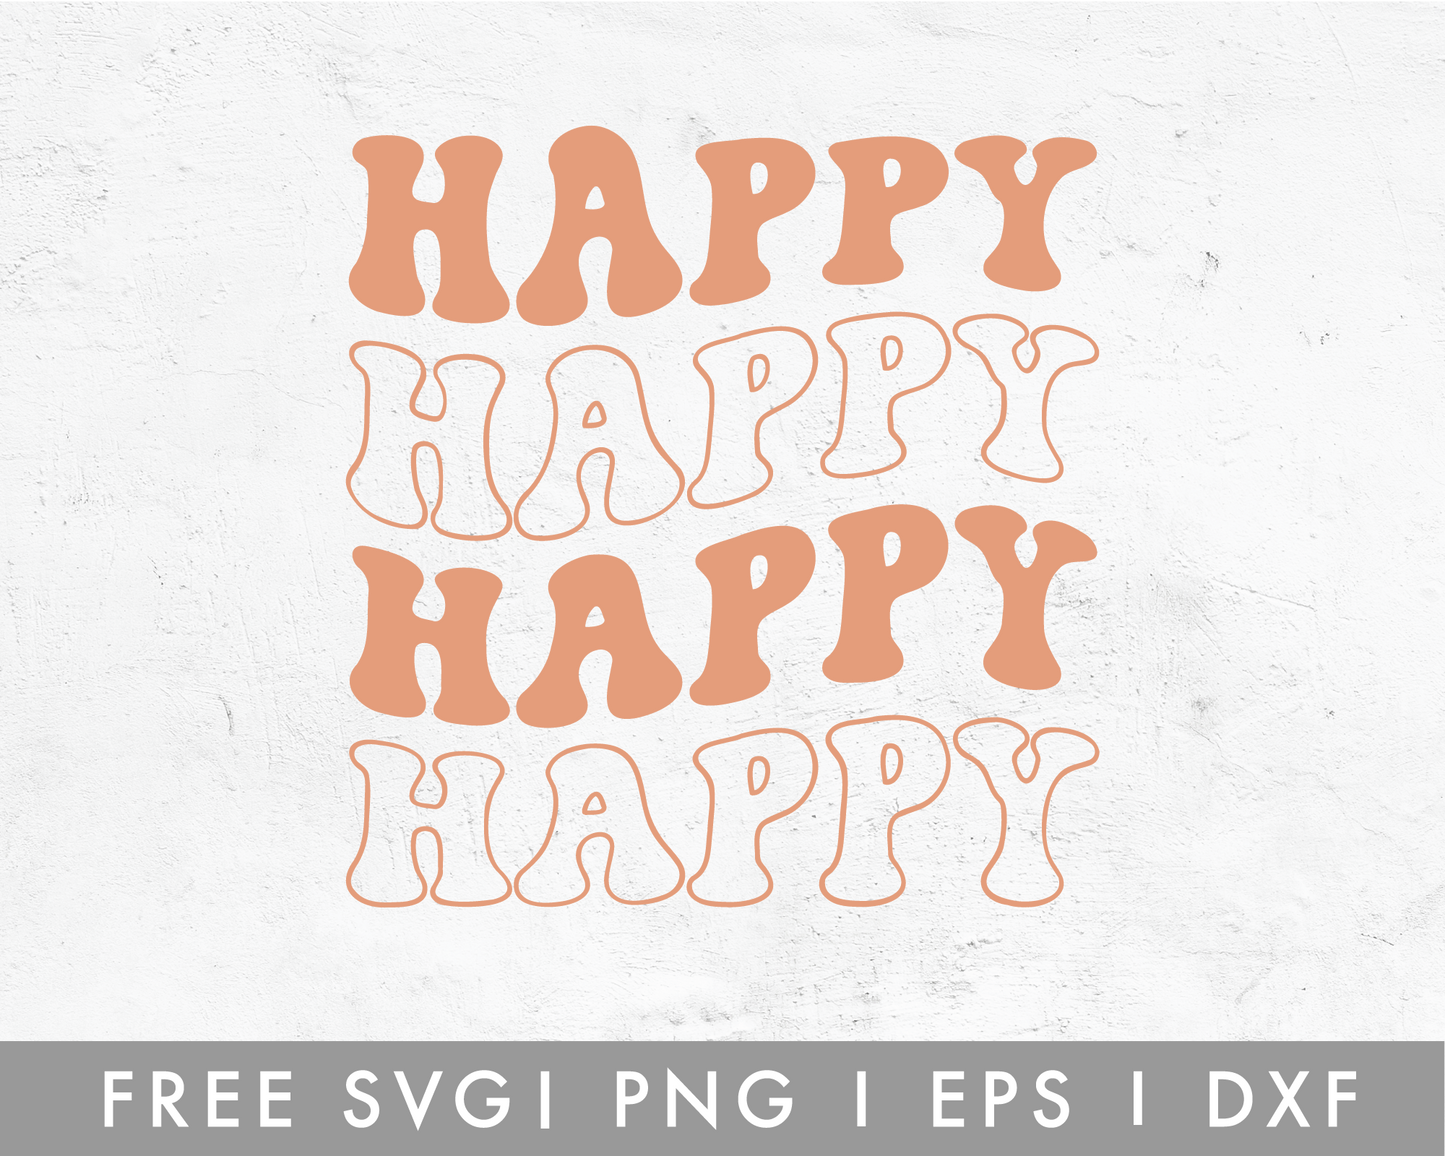 FREE Retro Happy SVG